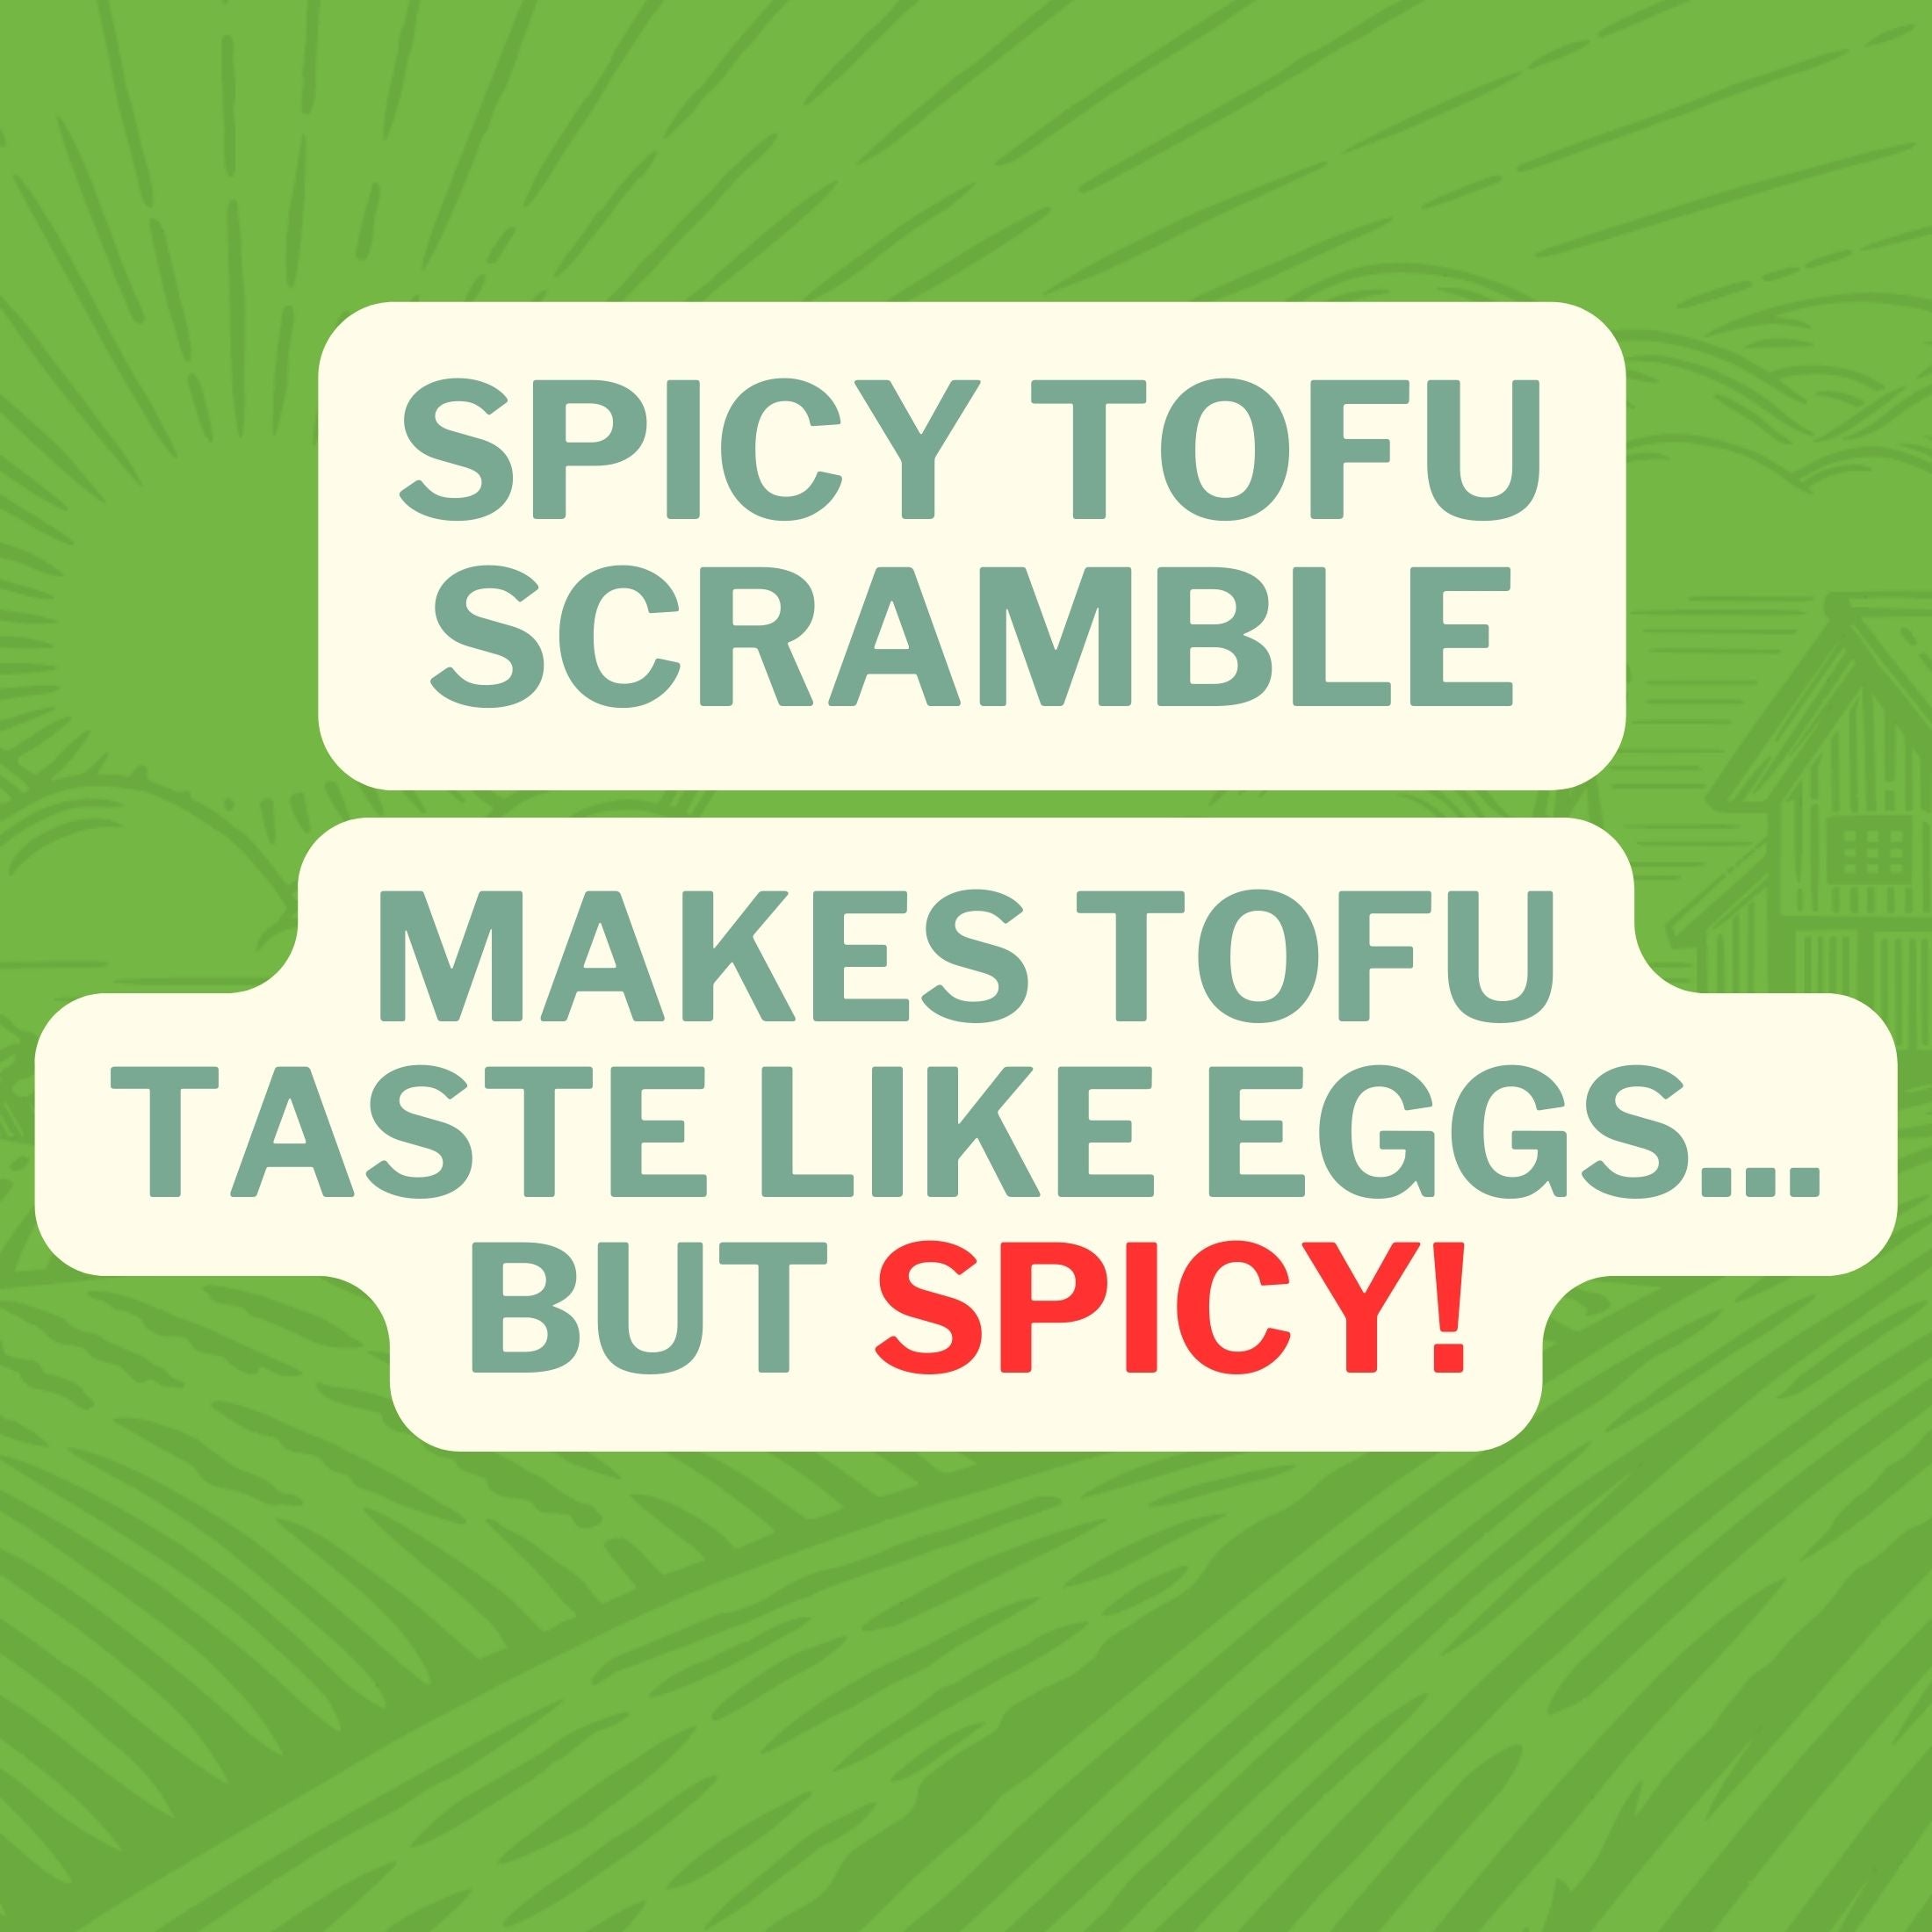 Spicy Tofu Scramble: Makes Tofu Taste like Eggs, But Spicy!